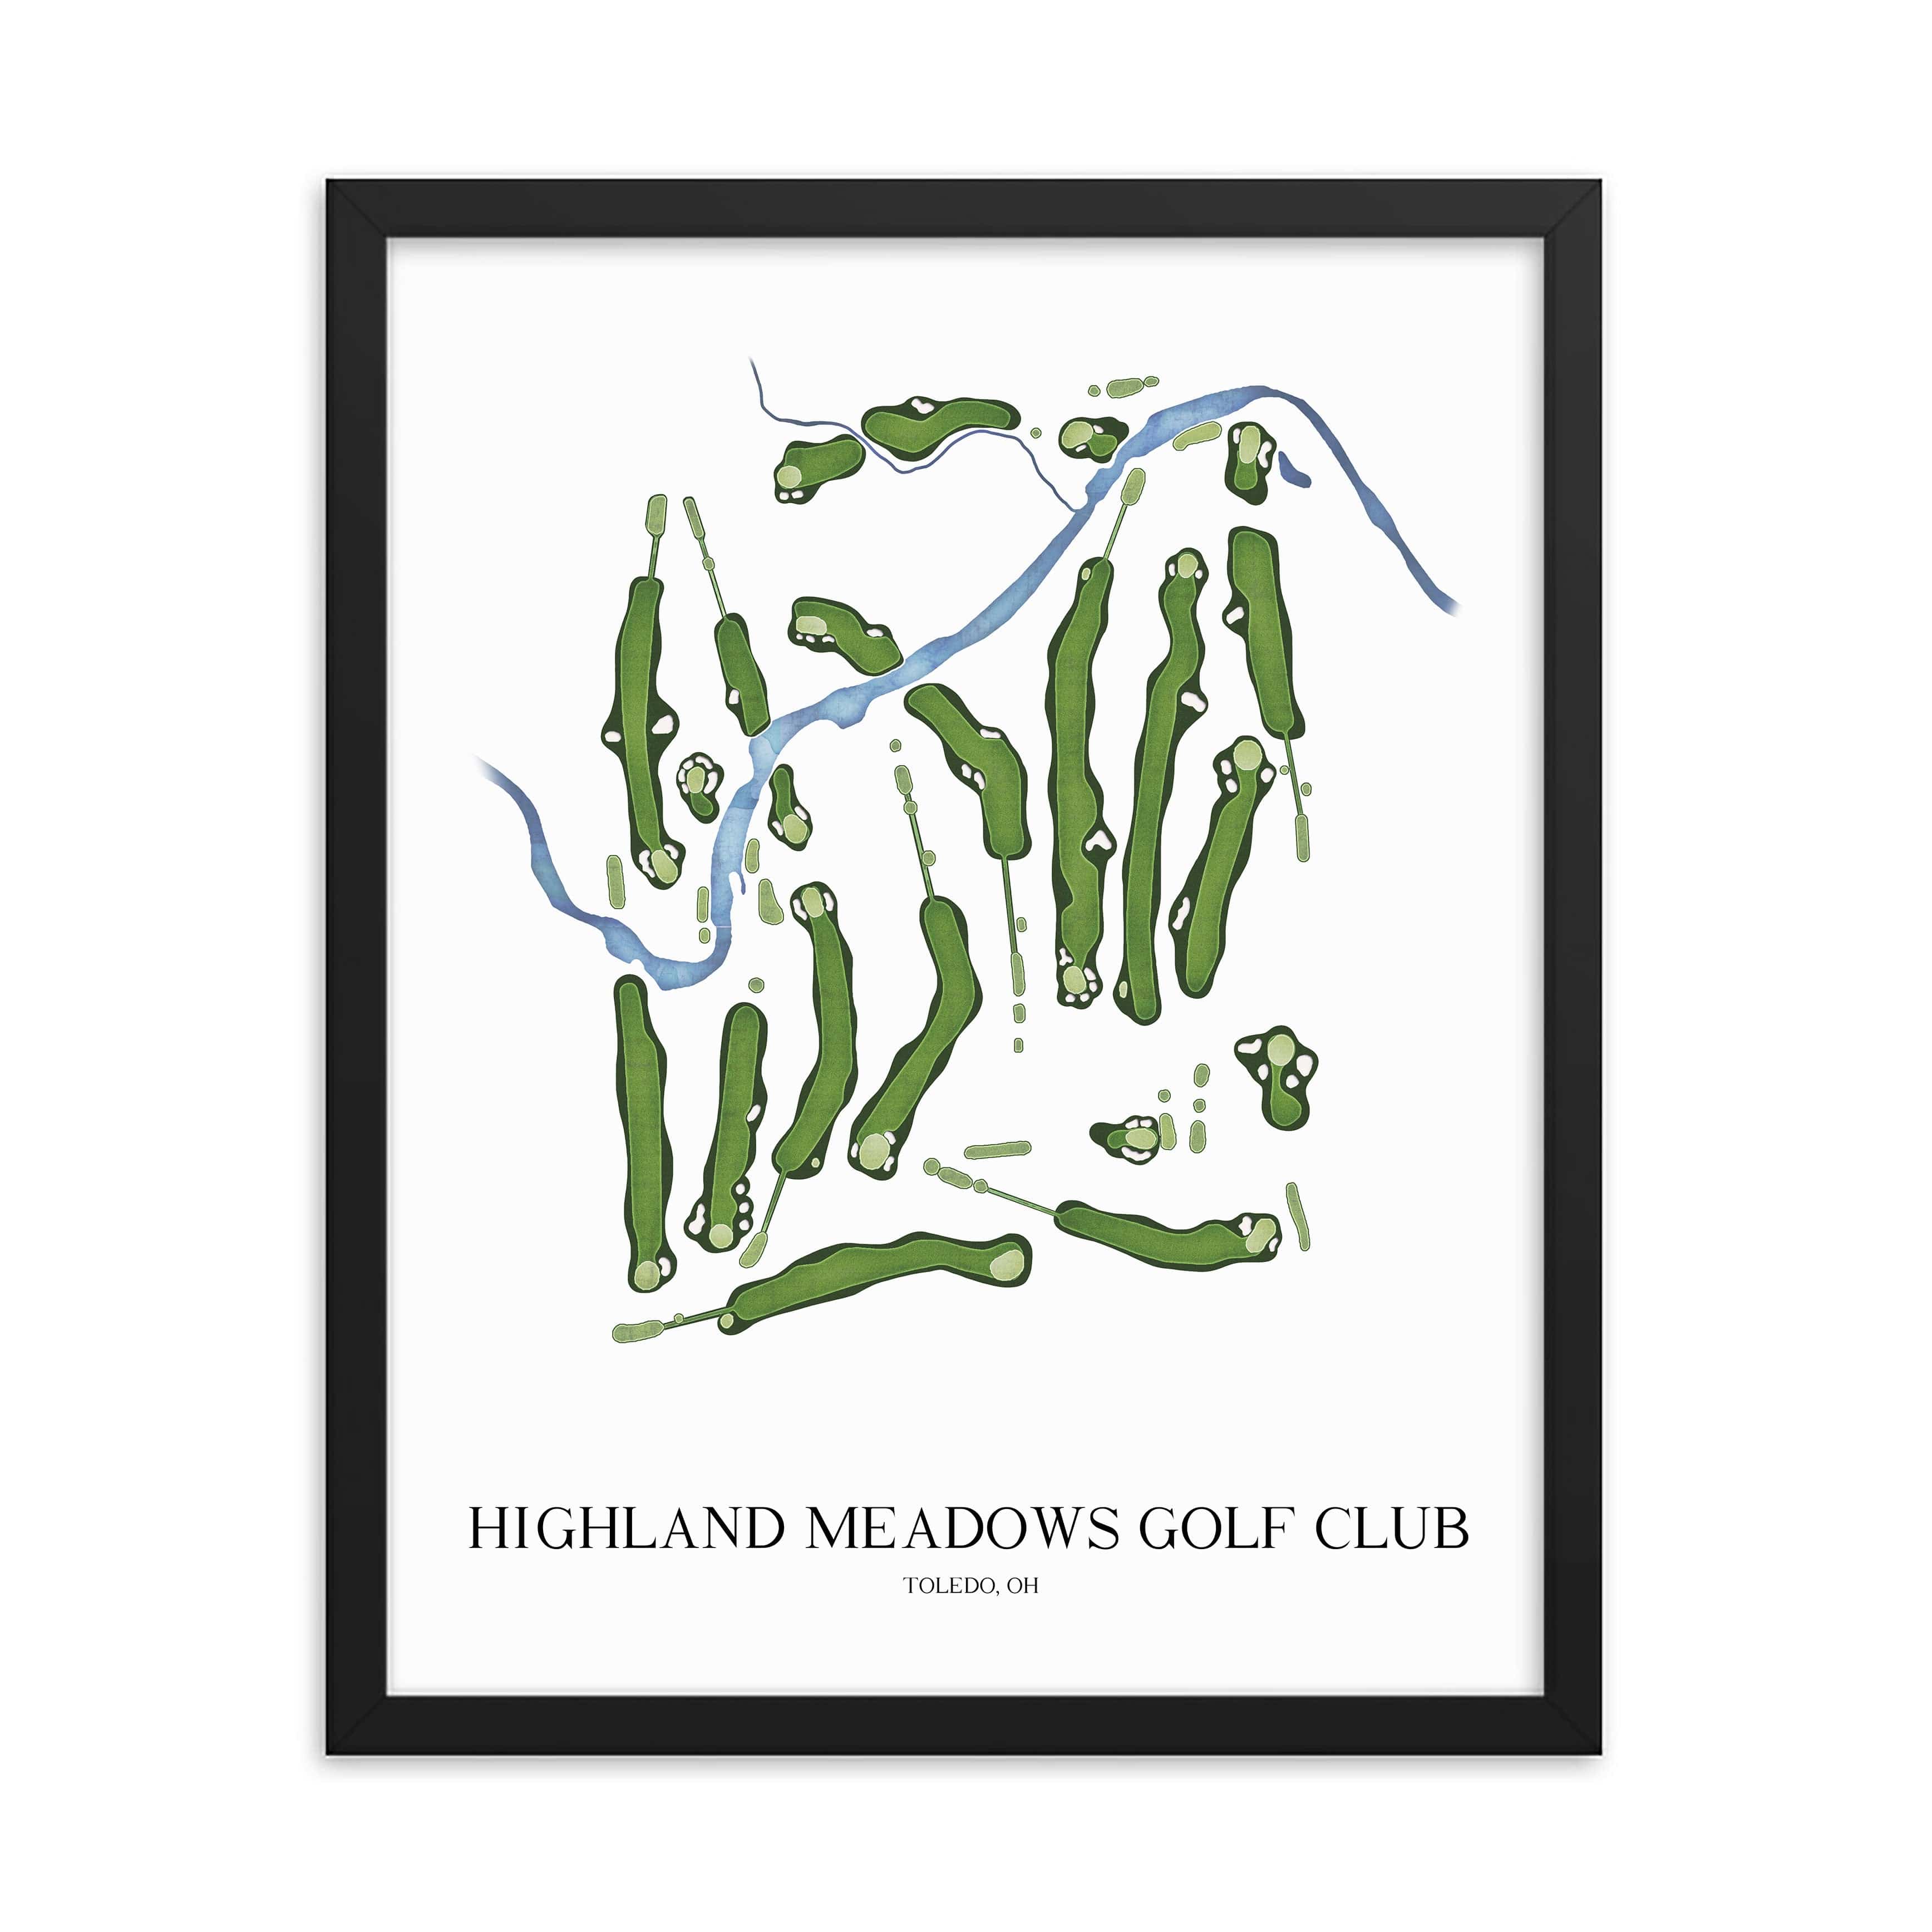 The 19th Hole Golf Shop - Golf Course Prints -  Highland Meadows Golf Club Golf Course Map